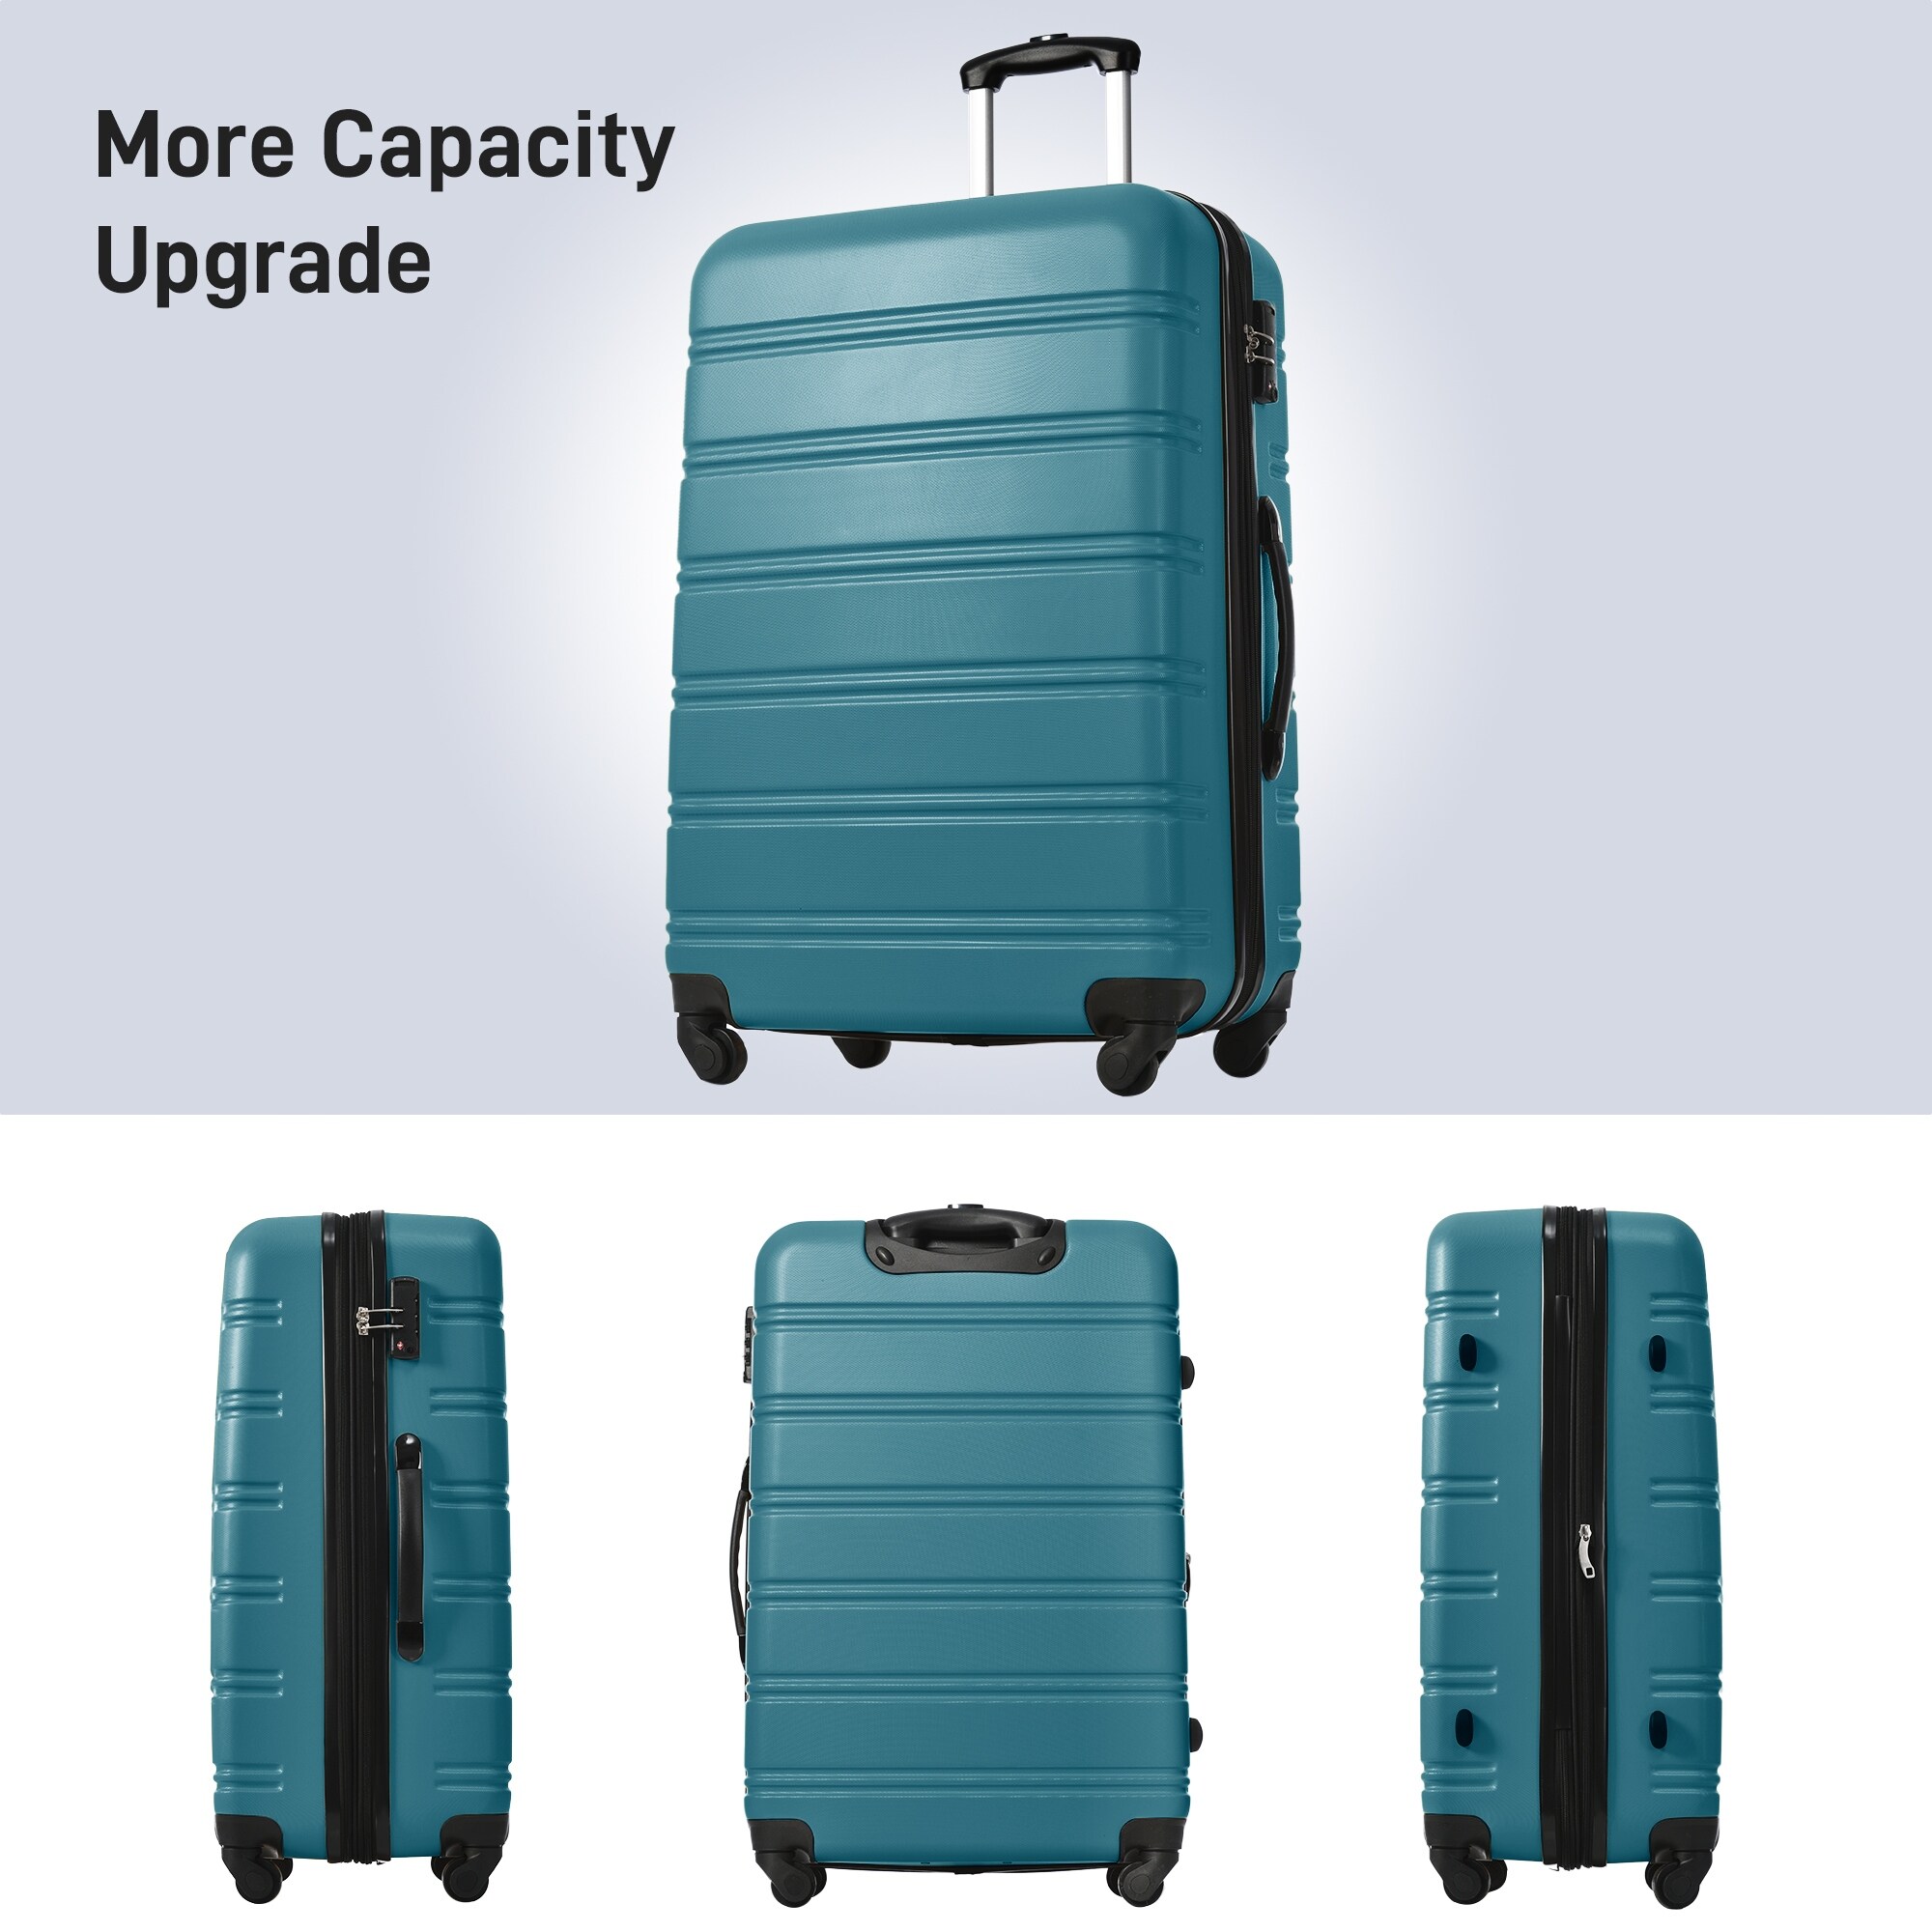 2 Piece Luggage Set, Carry-on Luggage Travel Set Hardside Expandable Luggage with Spinner Wheels & TSA Lock(20"24"), Dark Green